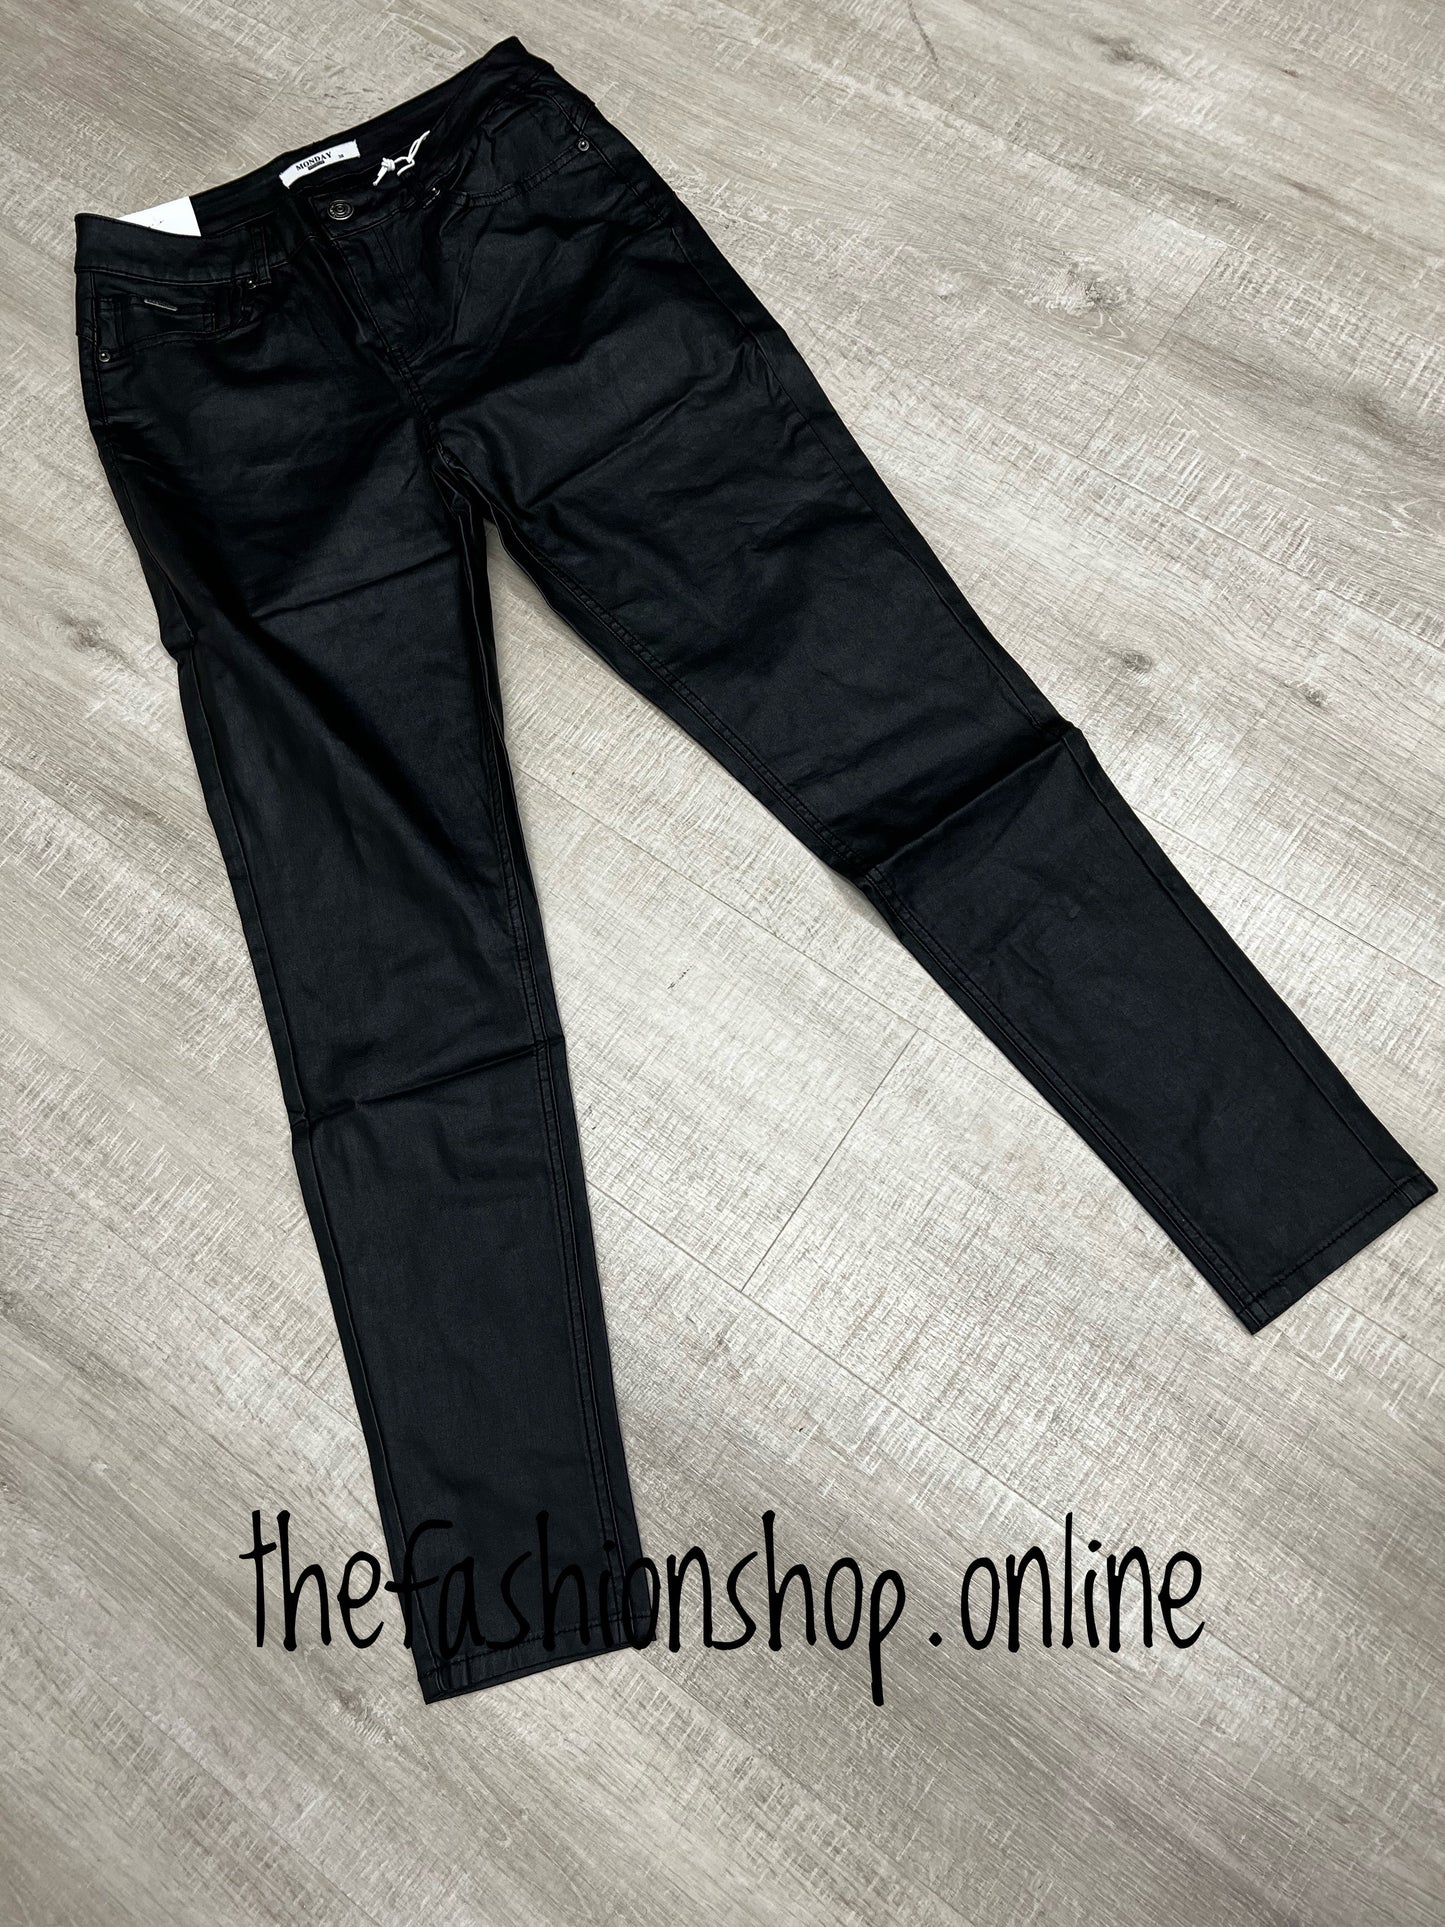 Premium black leather look ladies fit skinny jeans sizes 10-20